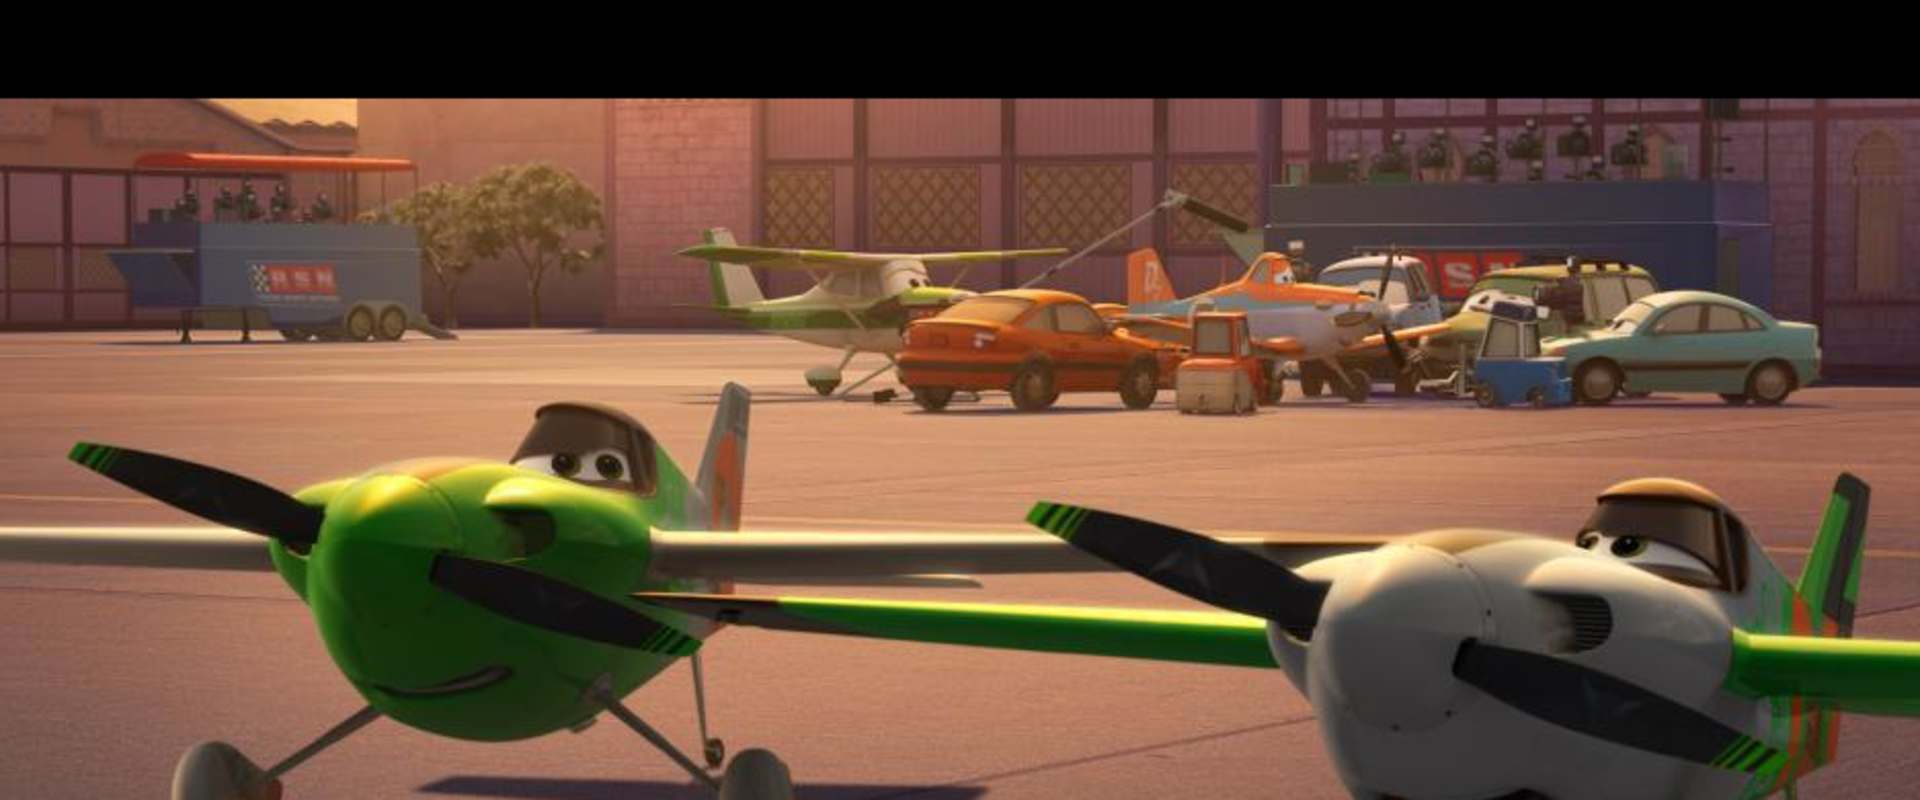 Planes background 2